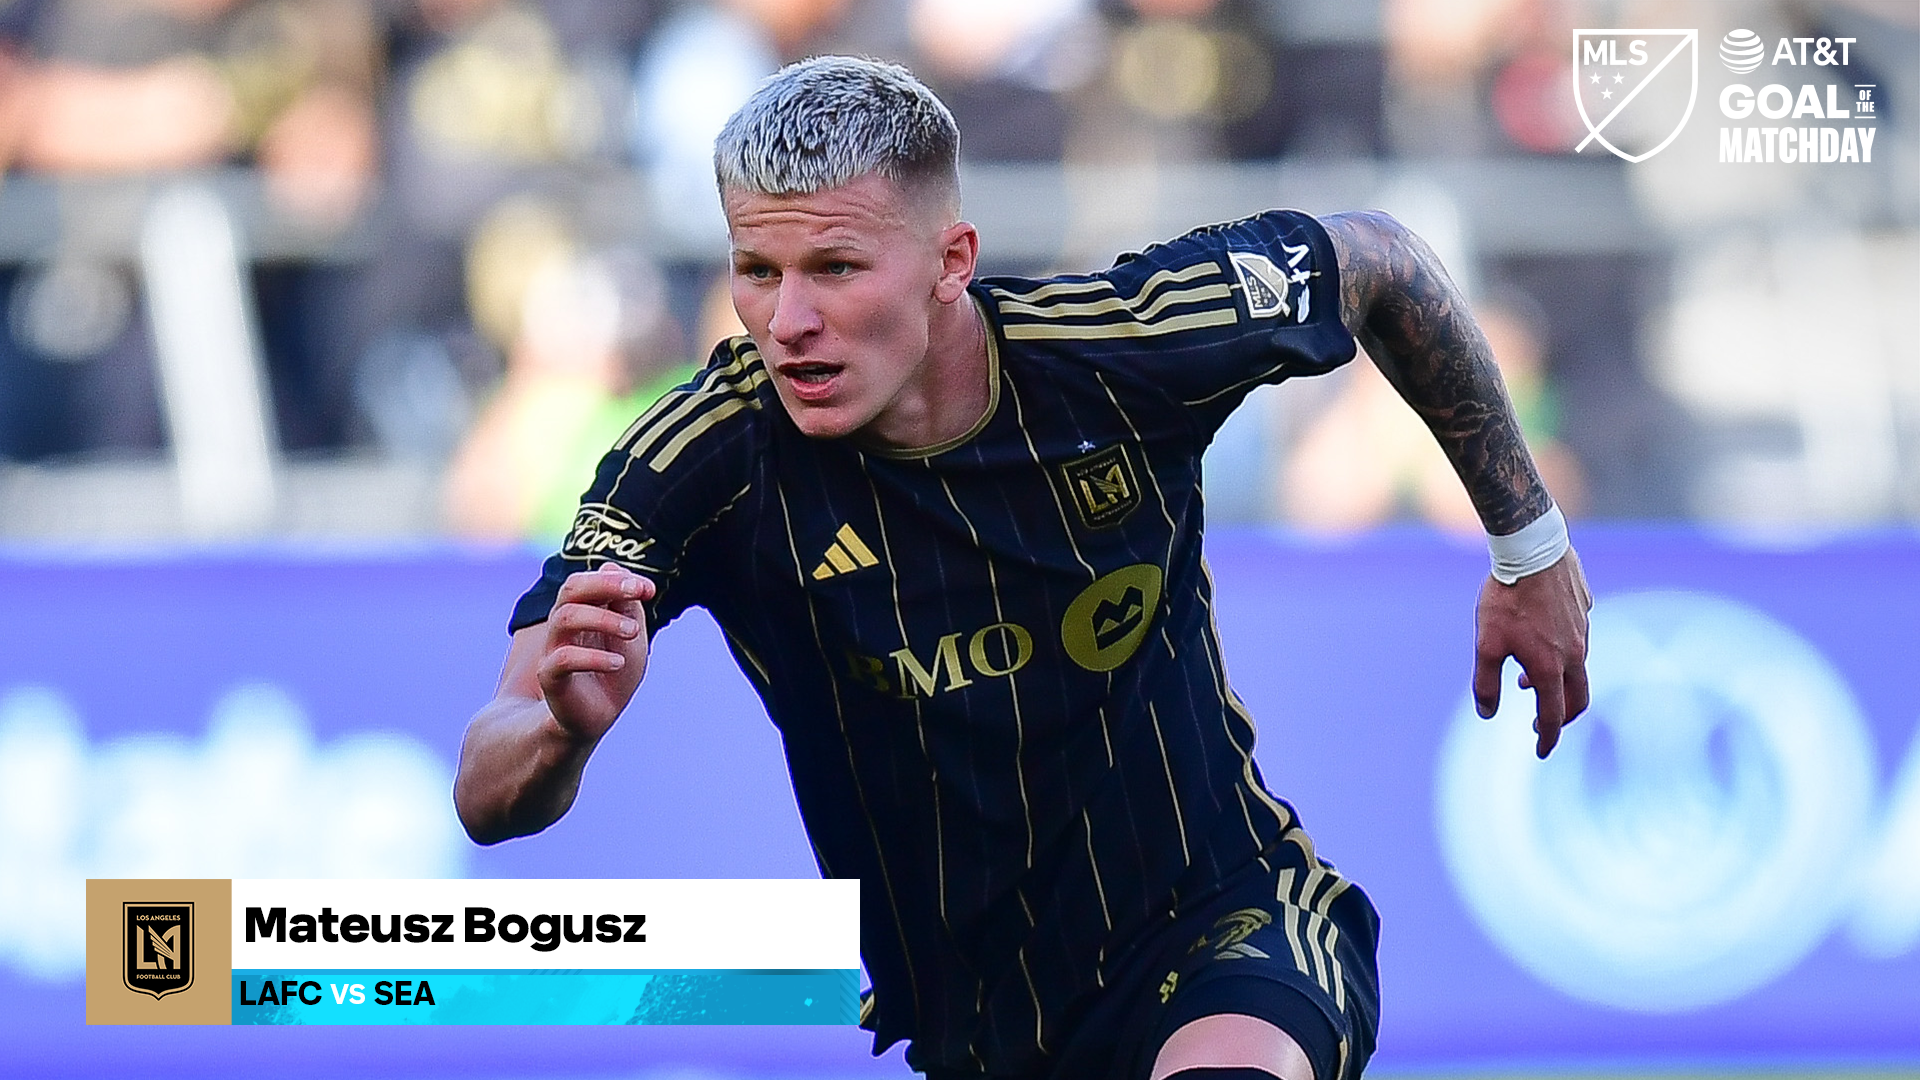 LAFC’s Mateusz Bogusz wins Goal of the Matchday | MLSSoccer.com